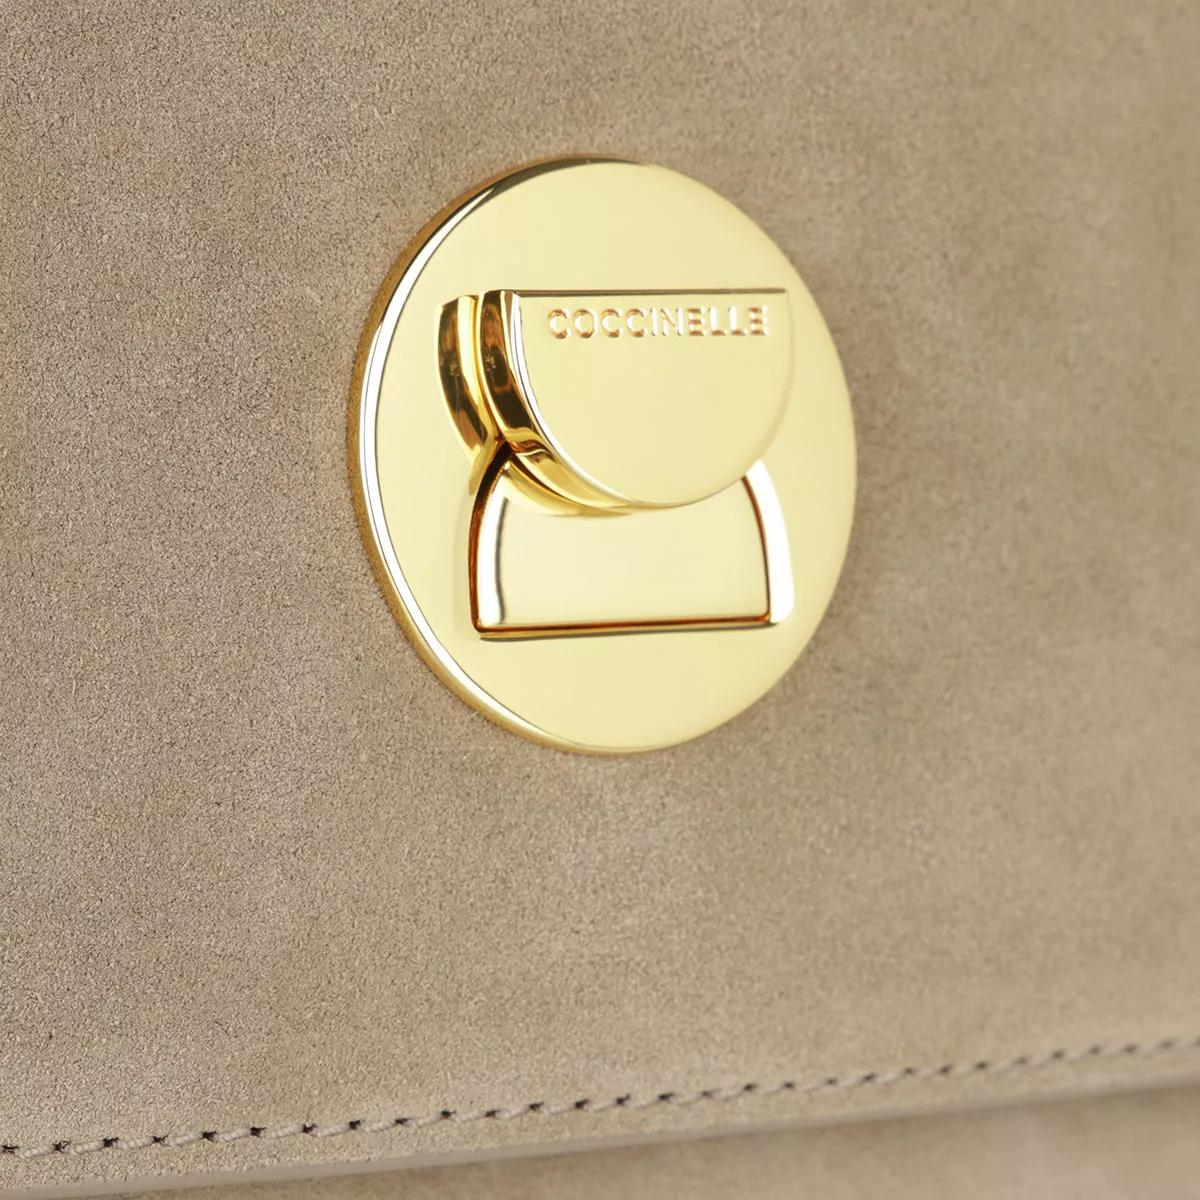 Coccinelle Satchels Handbag Suede Leather in beige